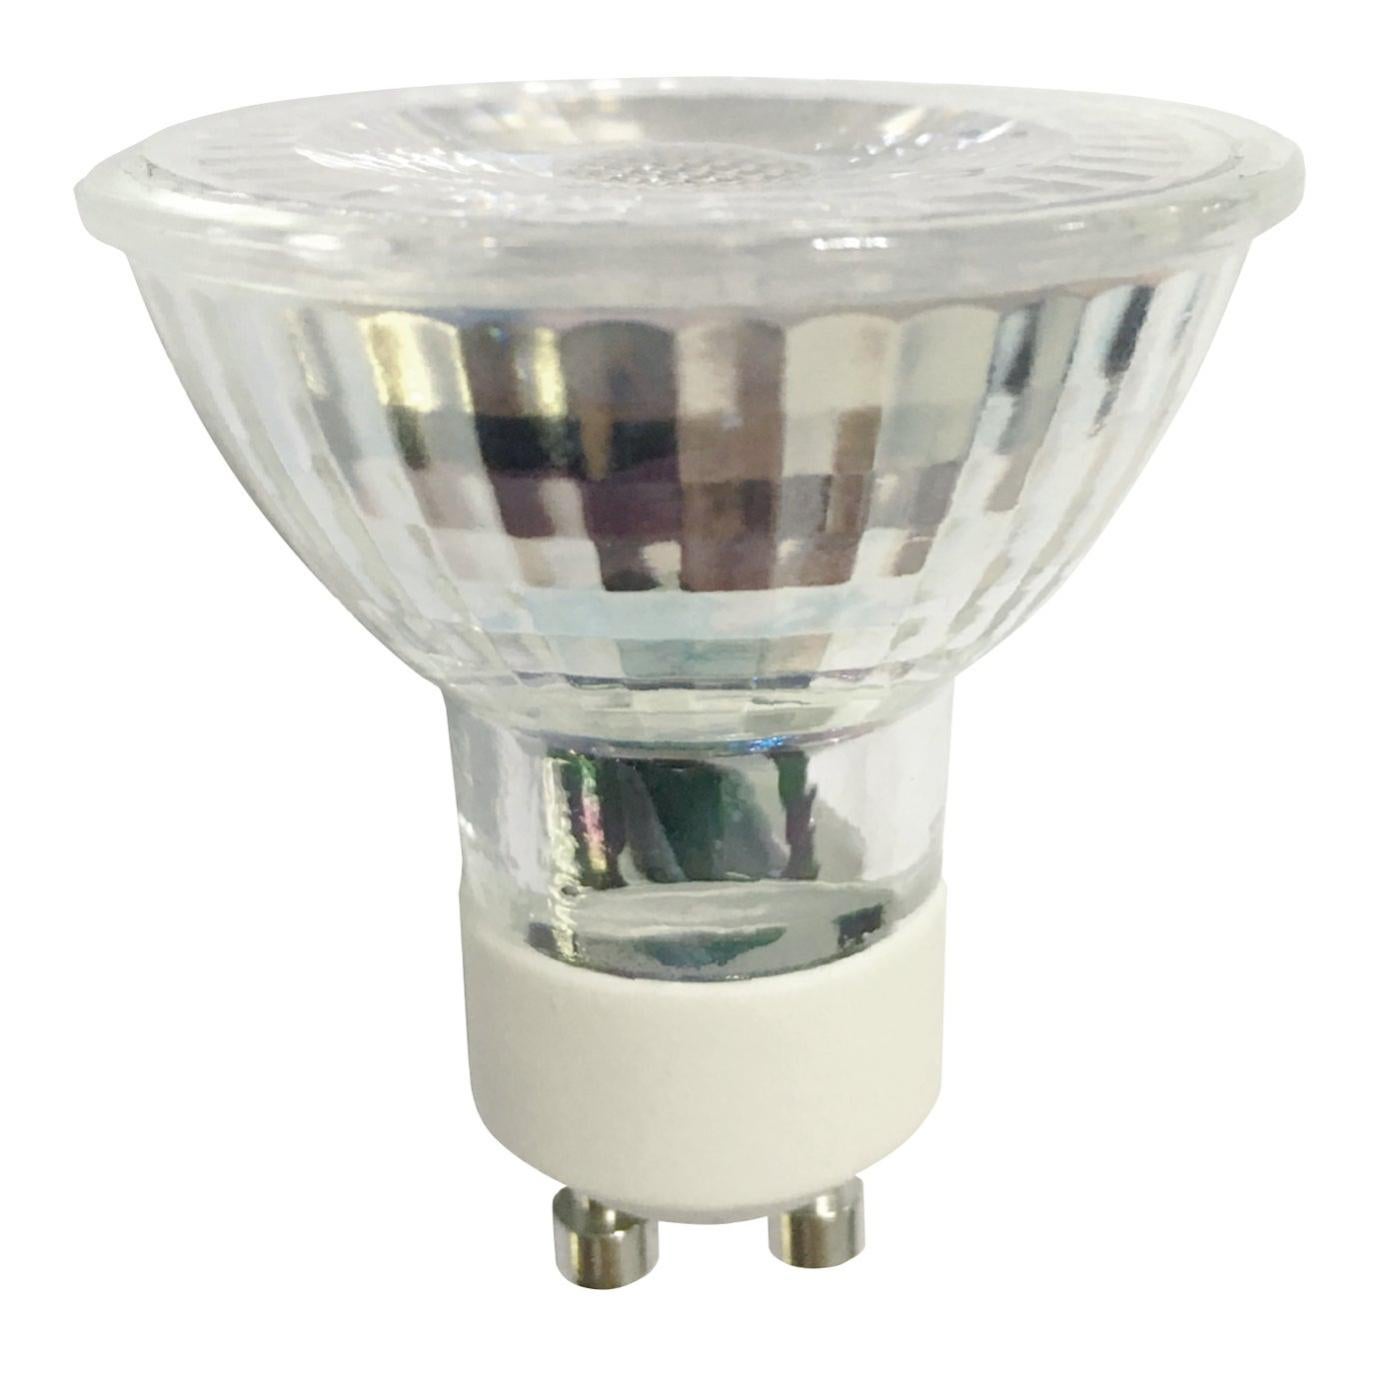 10x Lampadine LED GU10 dimmerabili - 5W - 2700K - 345 Lumen - Pacchetto  sconto 